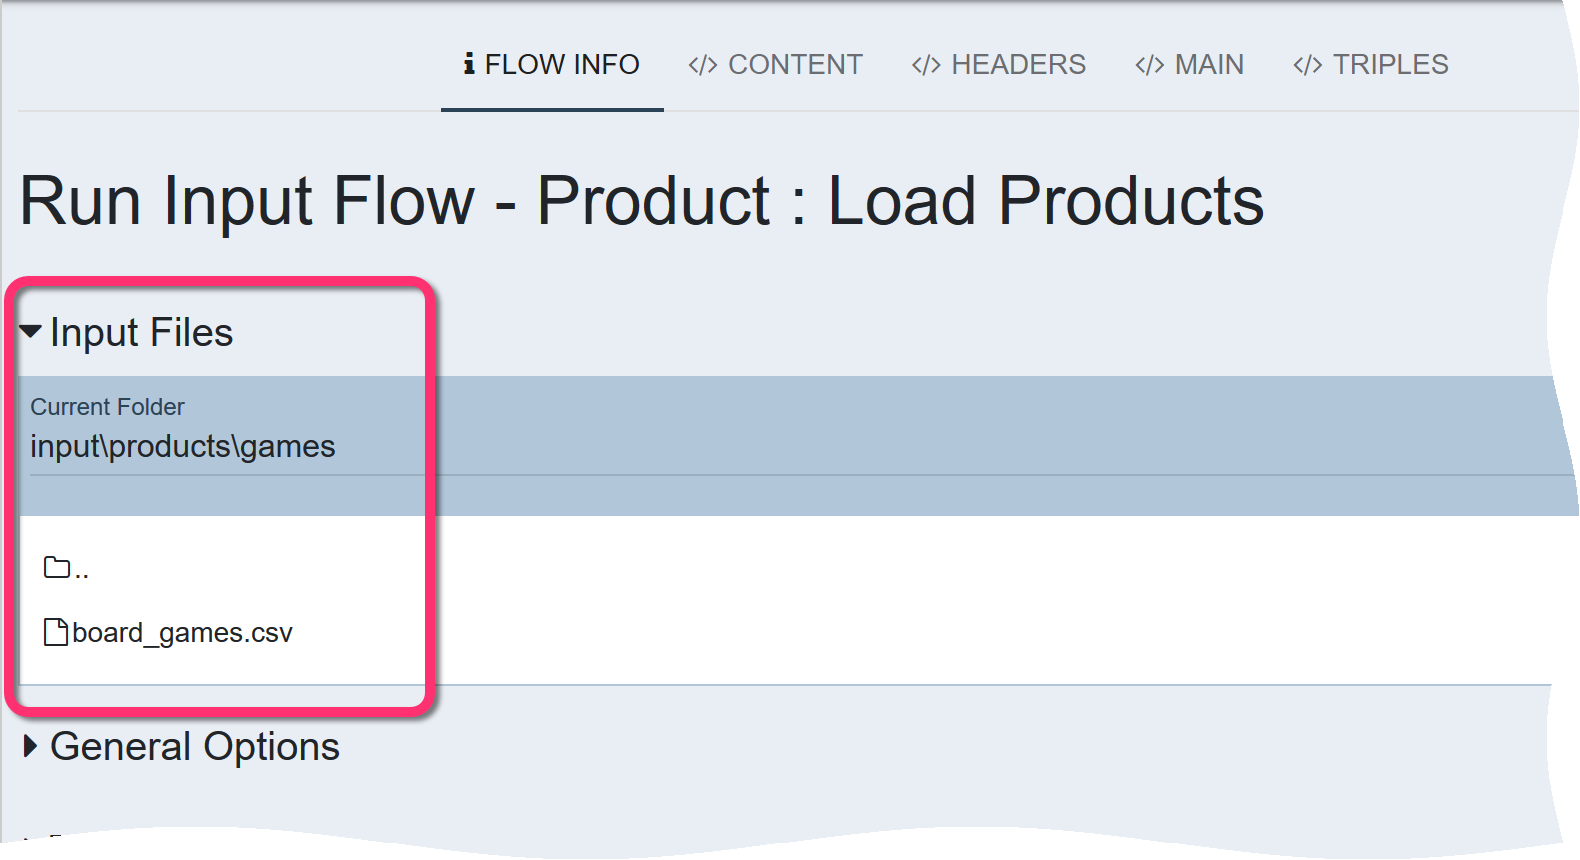 Run Input Flow - Input Files